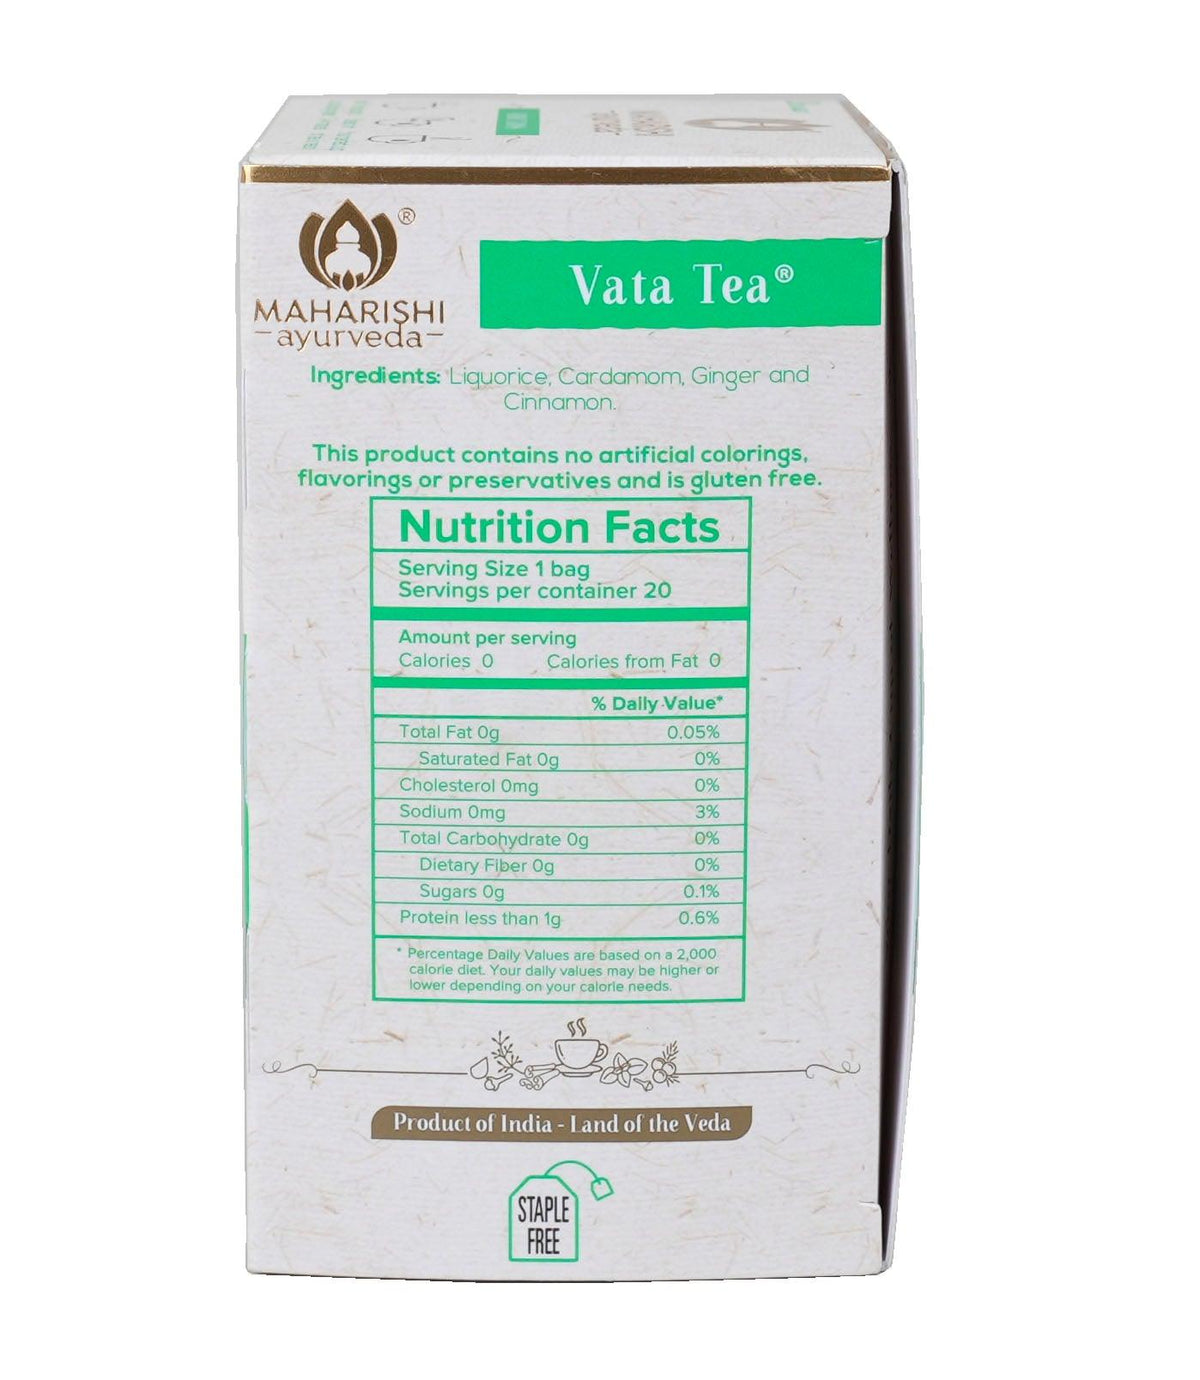 Vata Tea 20 tea bags - Holy Sanity 